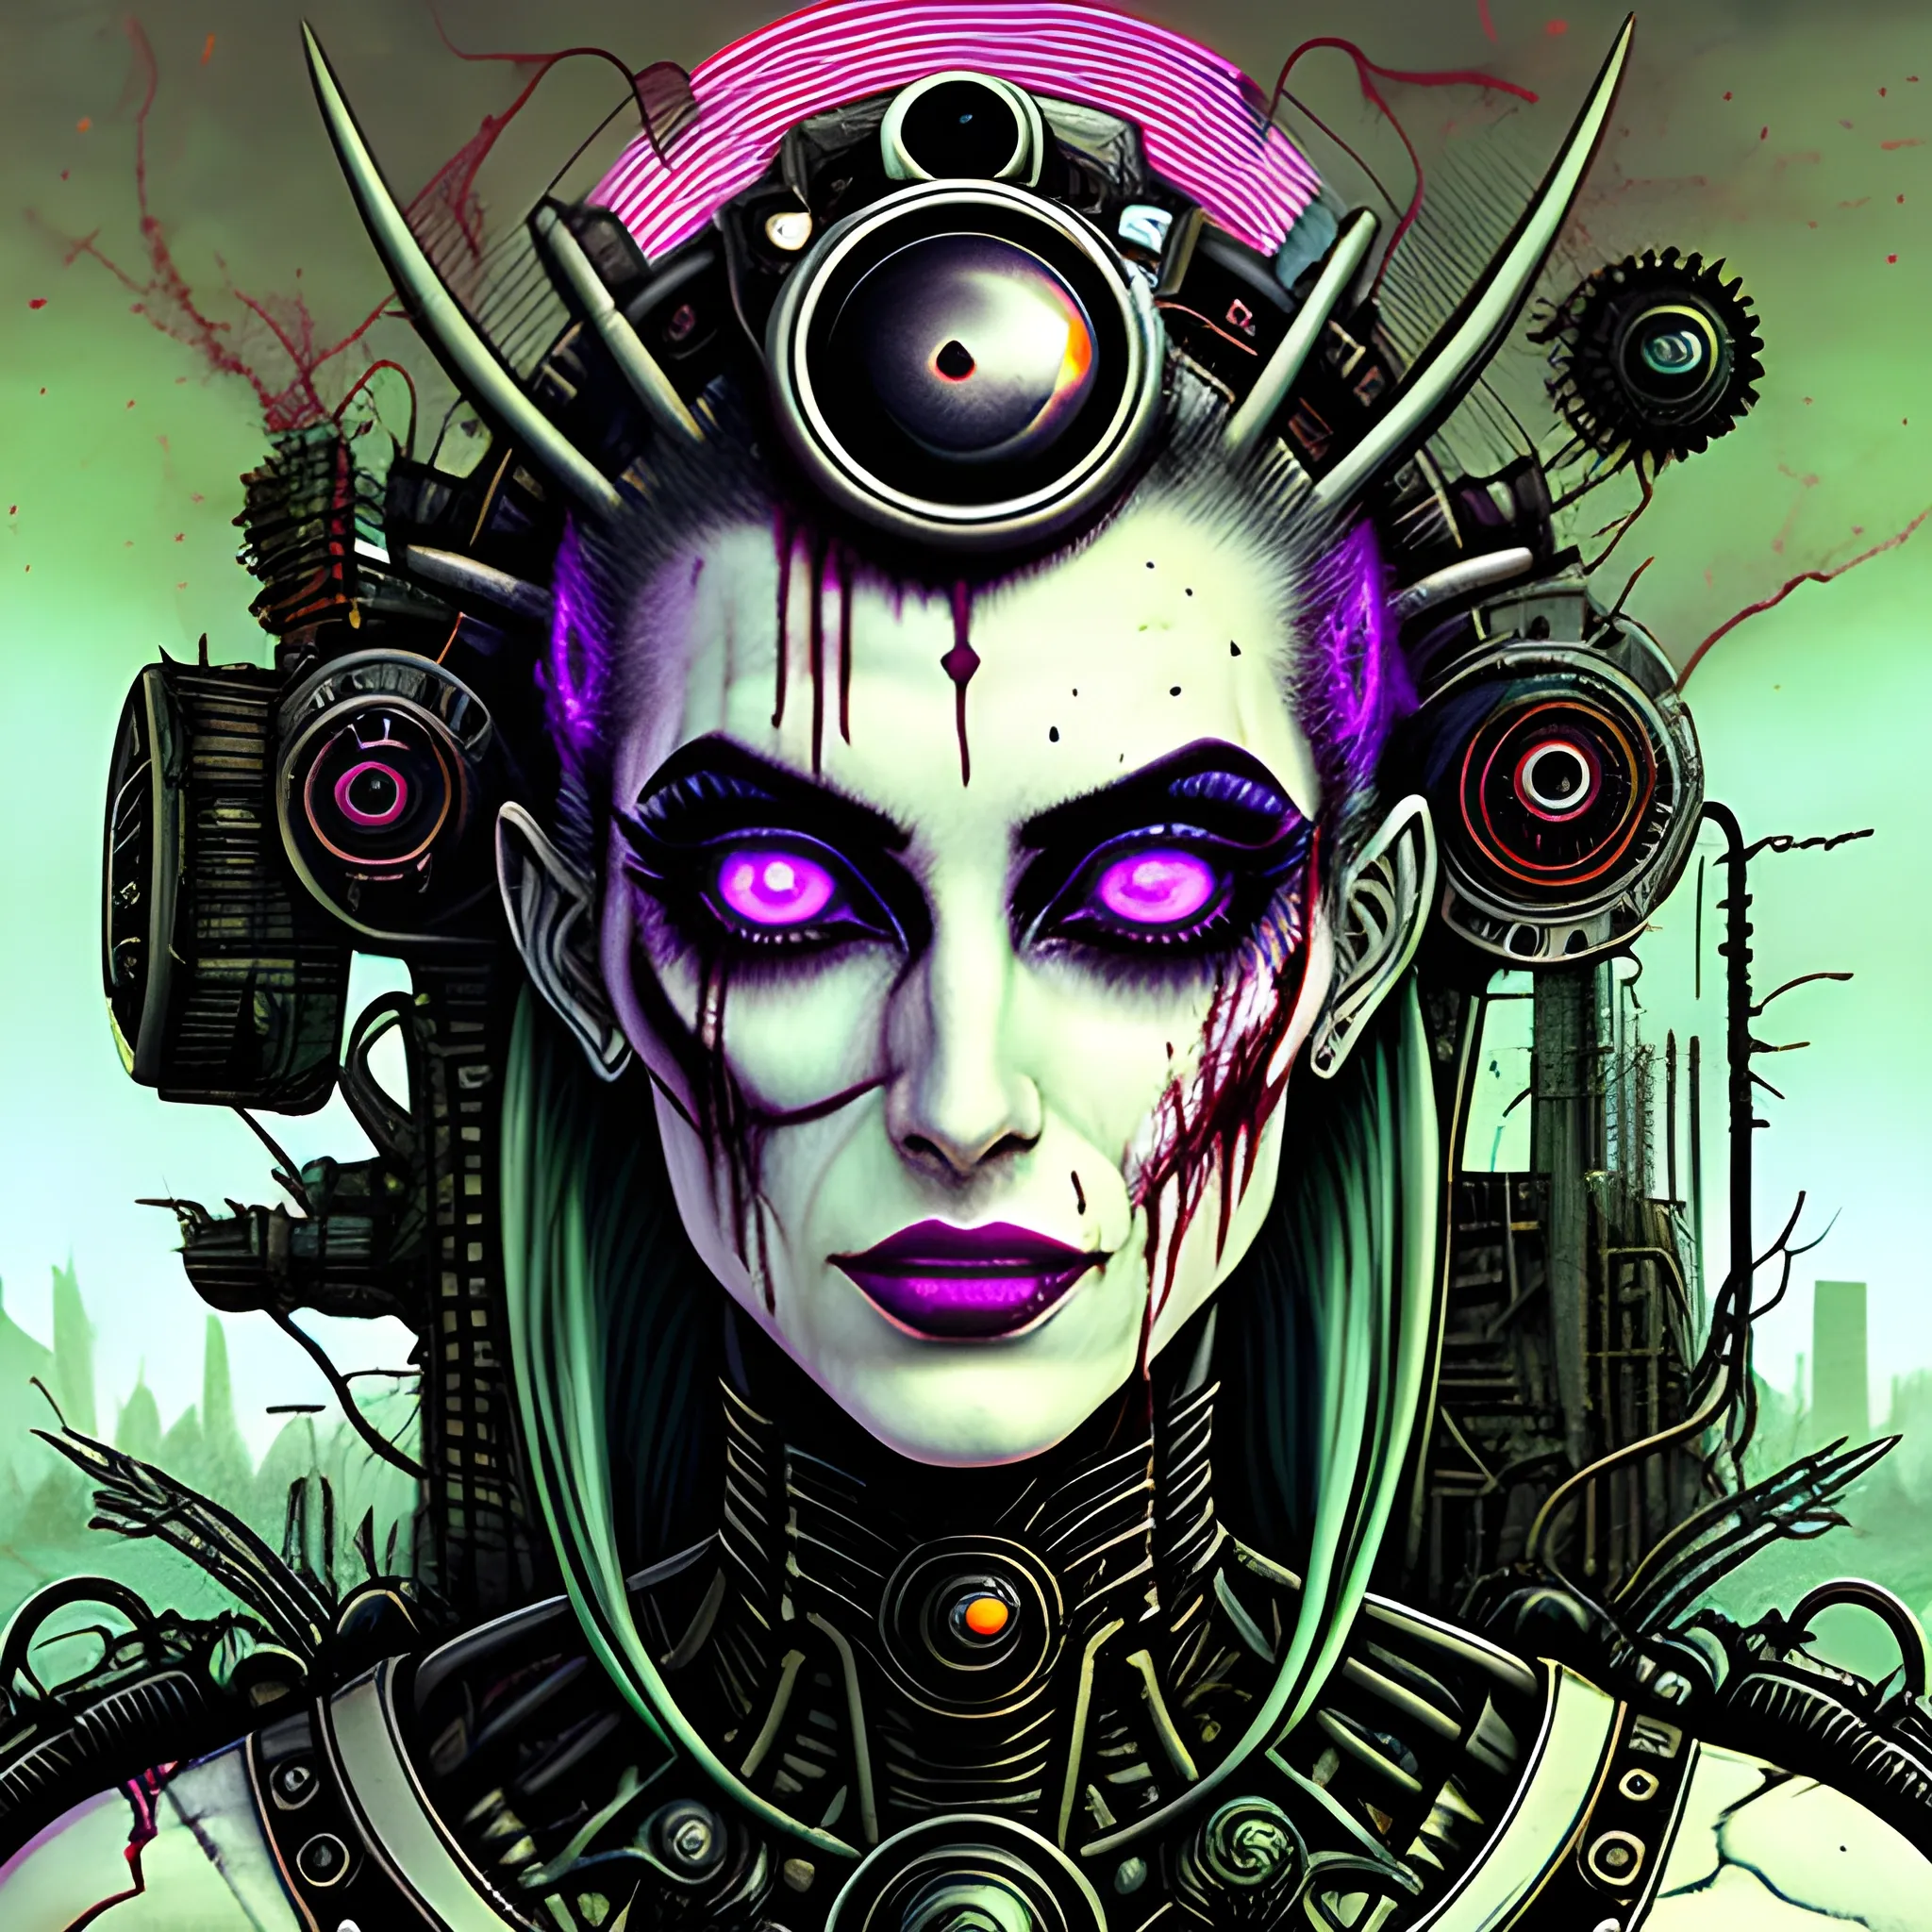 experoimental techno survivor dream weird blood eyes plants, pos apocalyptic techno machines girl goddess